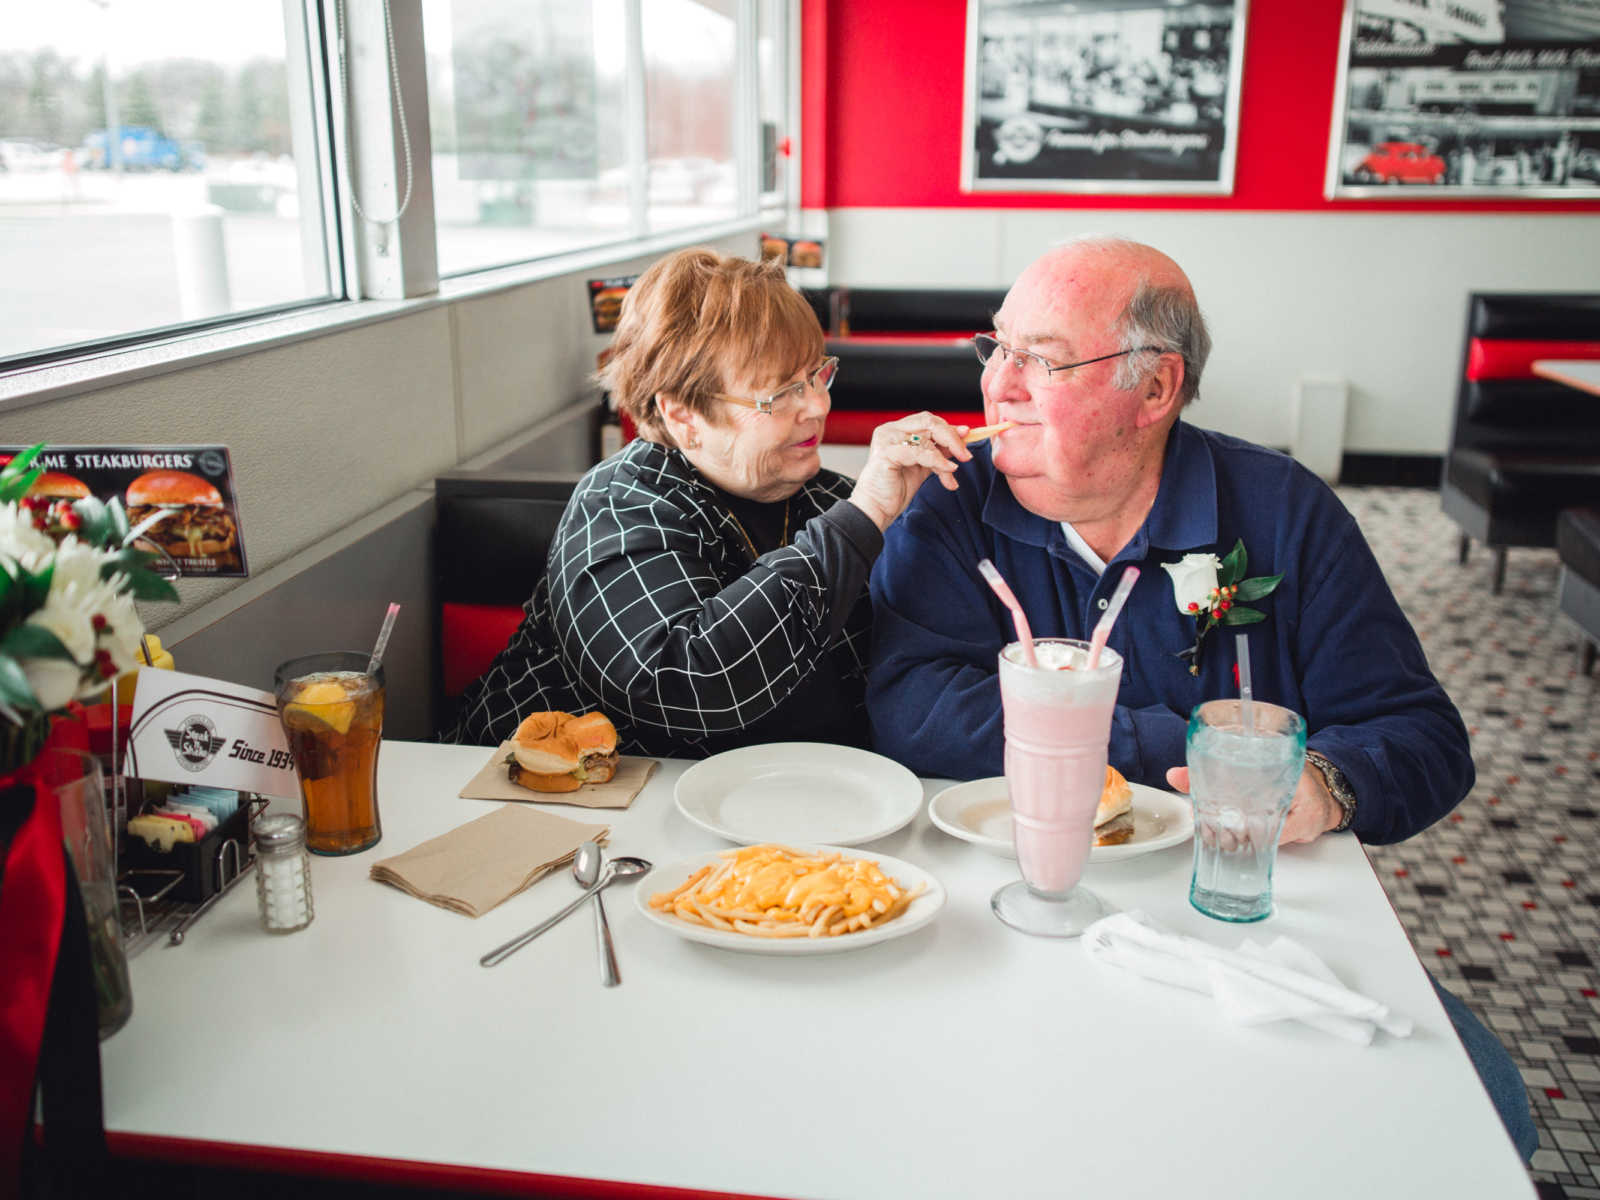 Wife feeds husband a fry in Steak 'n Shake where they met in 1962